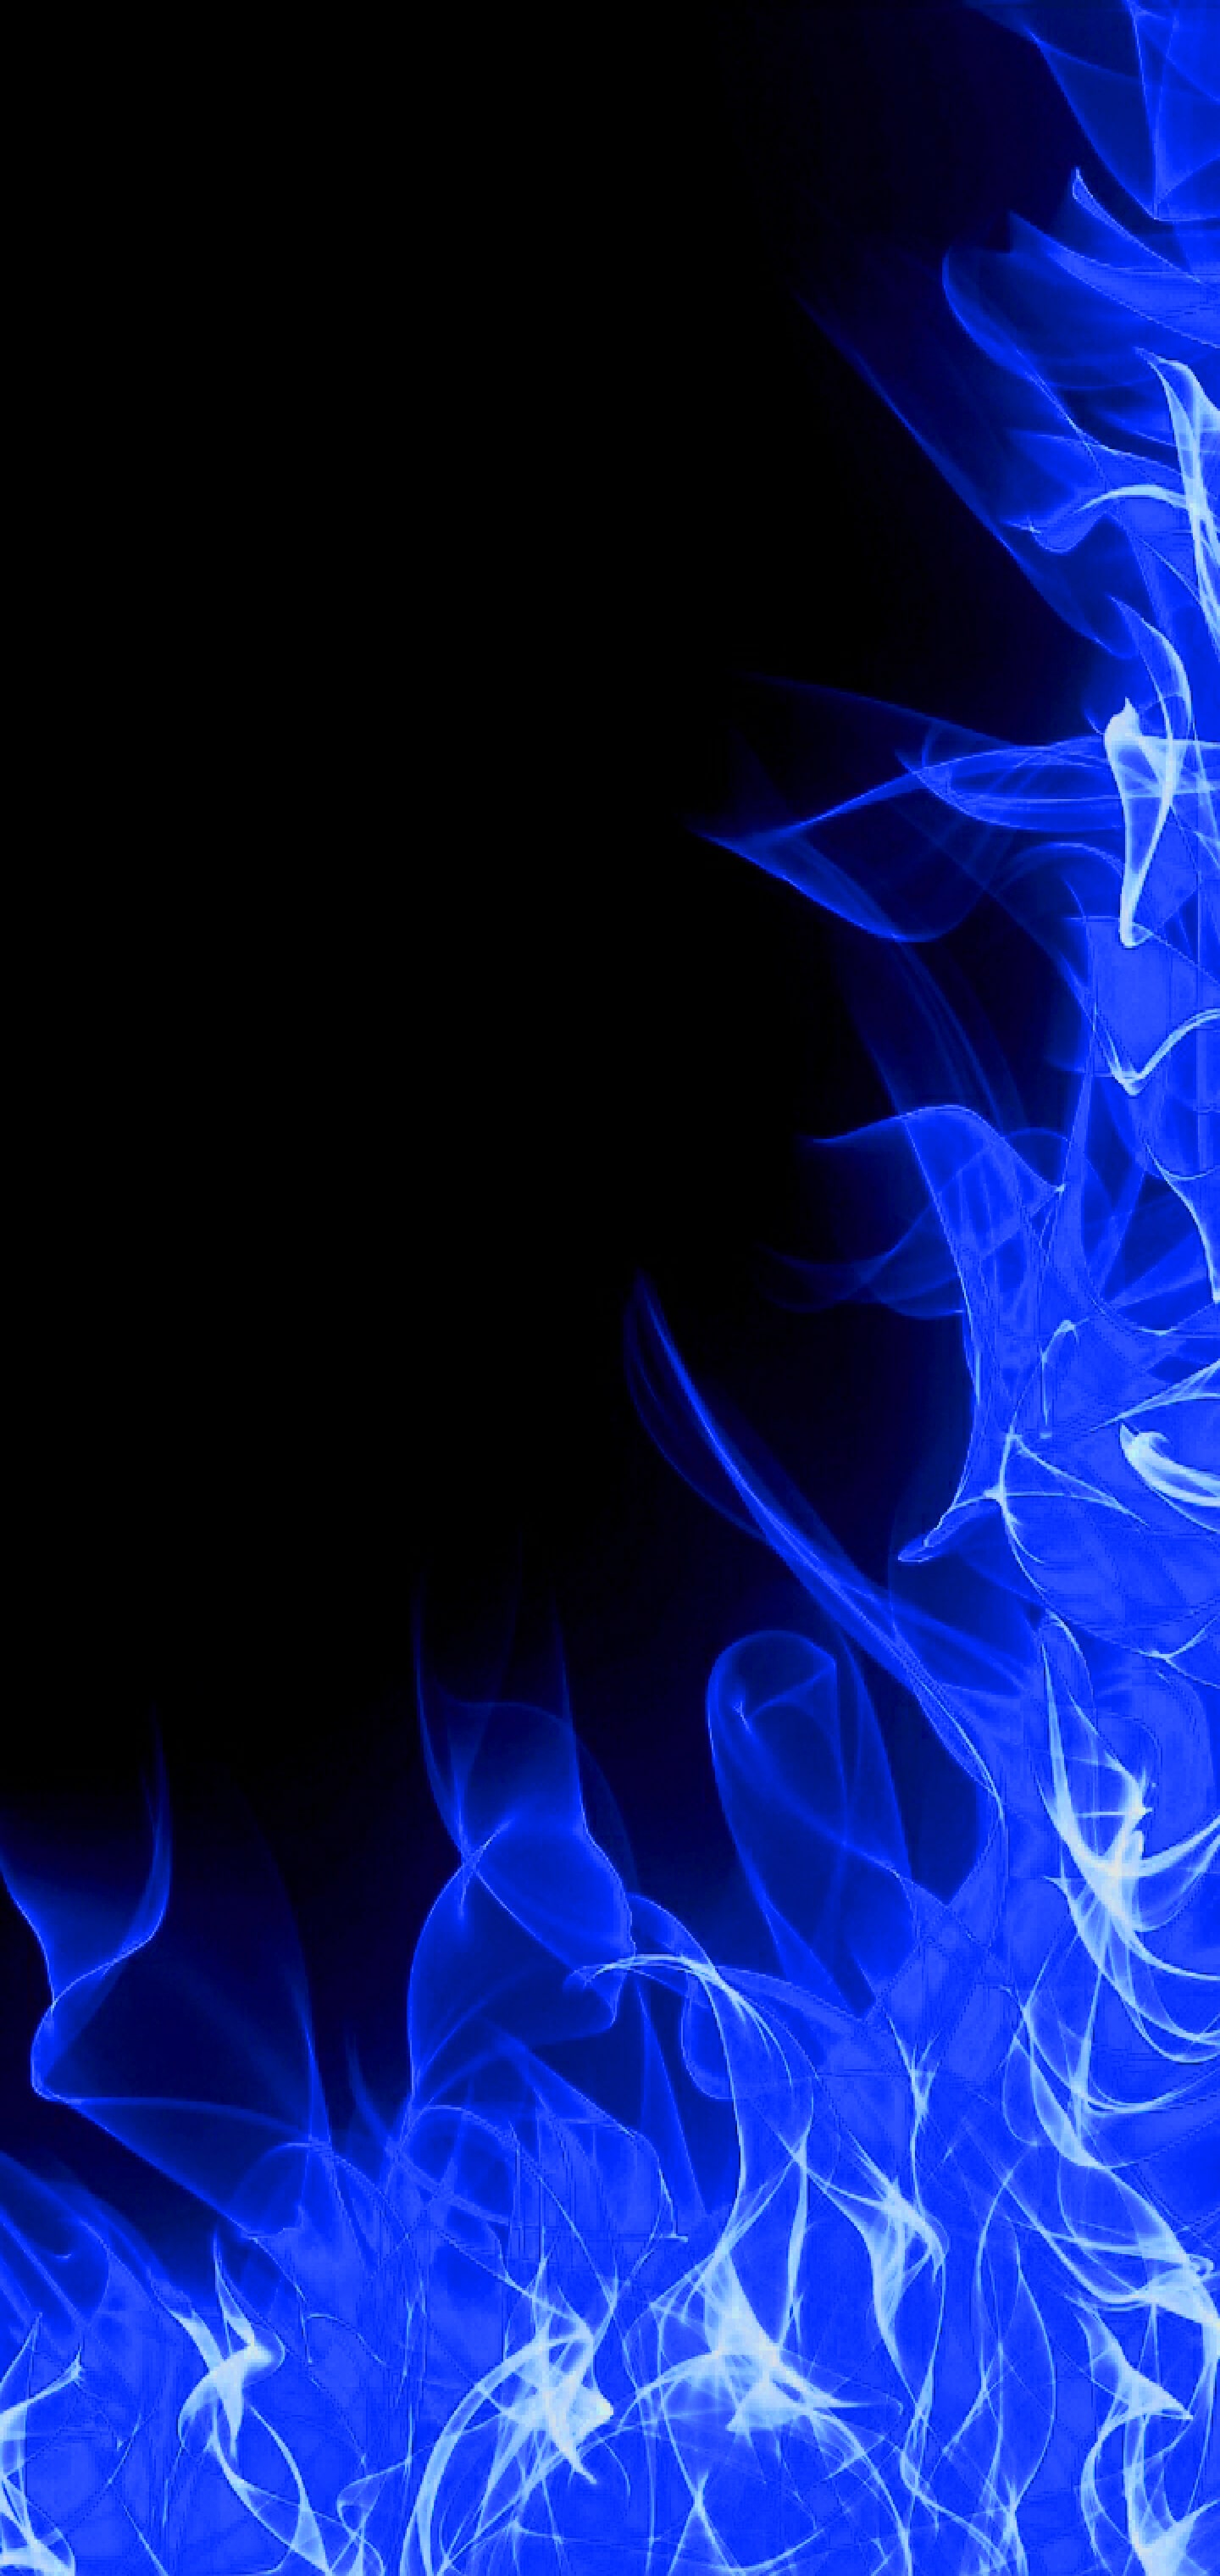 abstract blue fire wallpaper